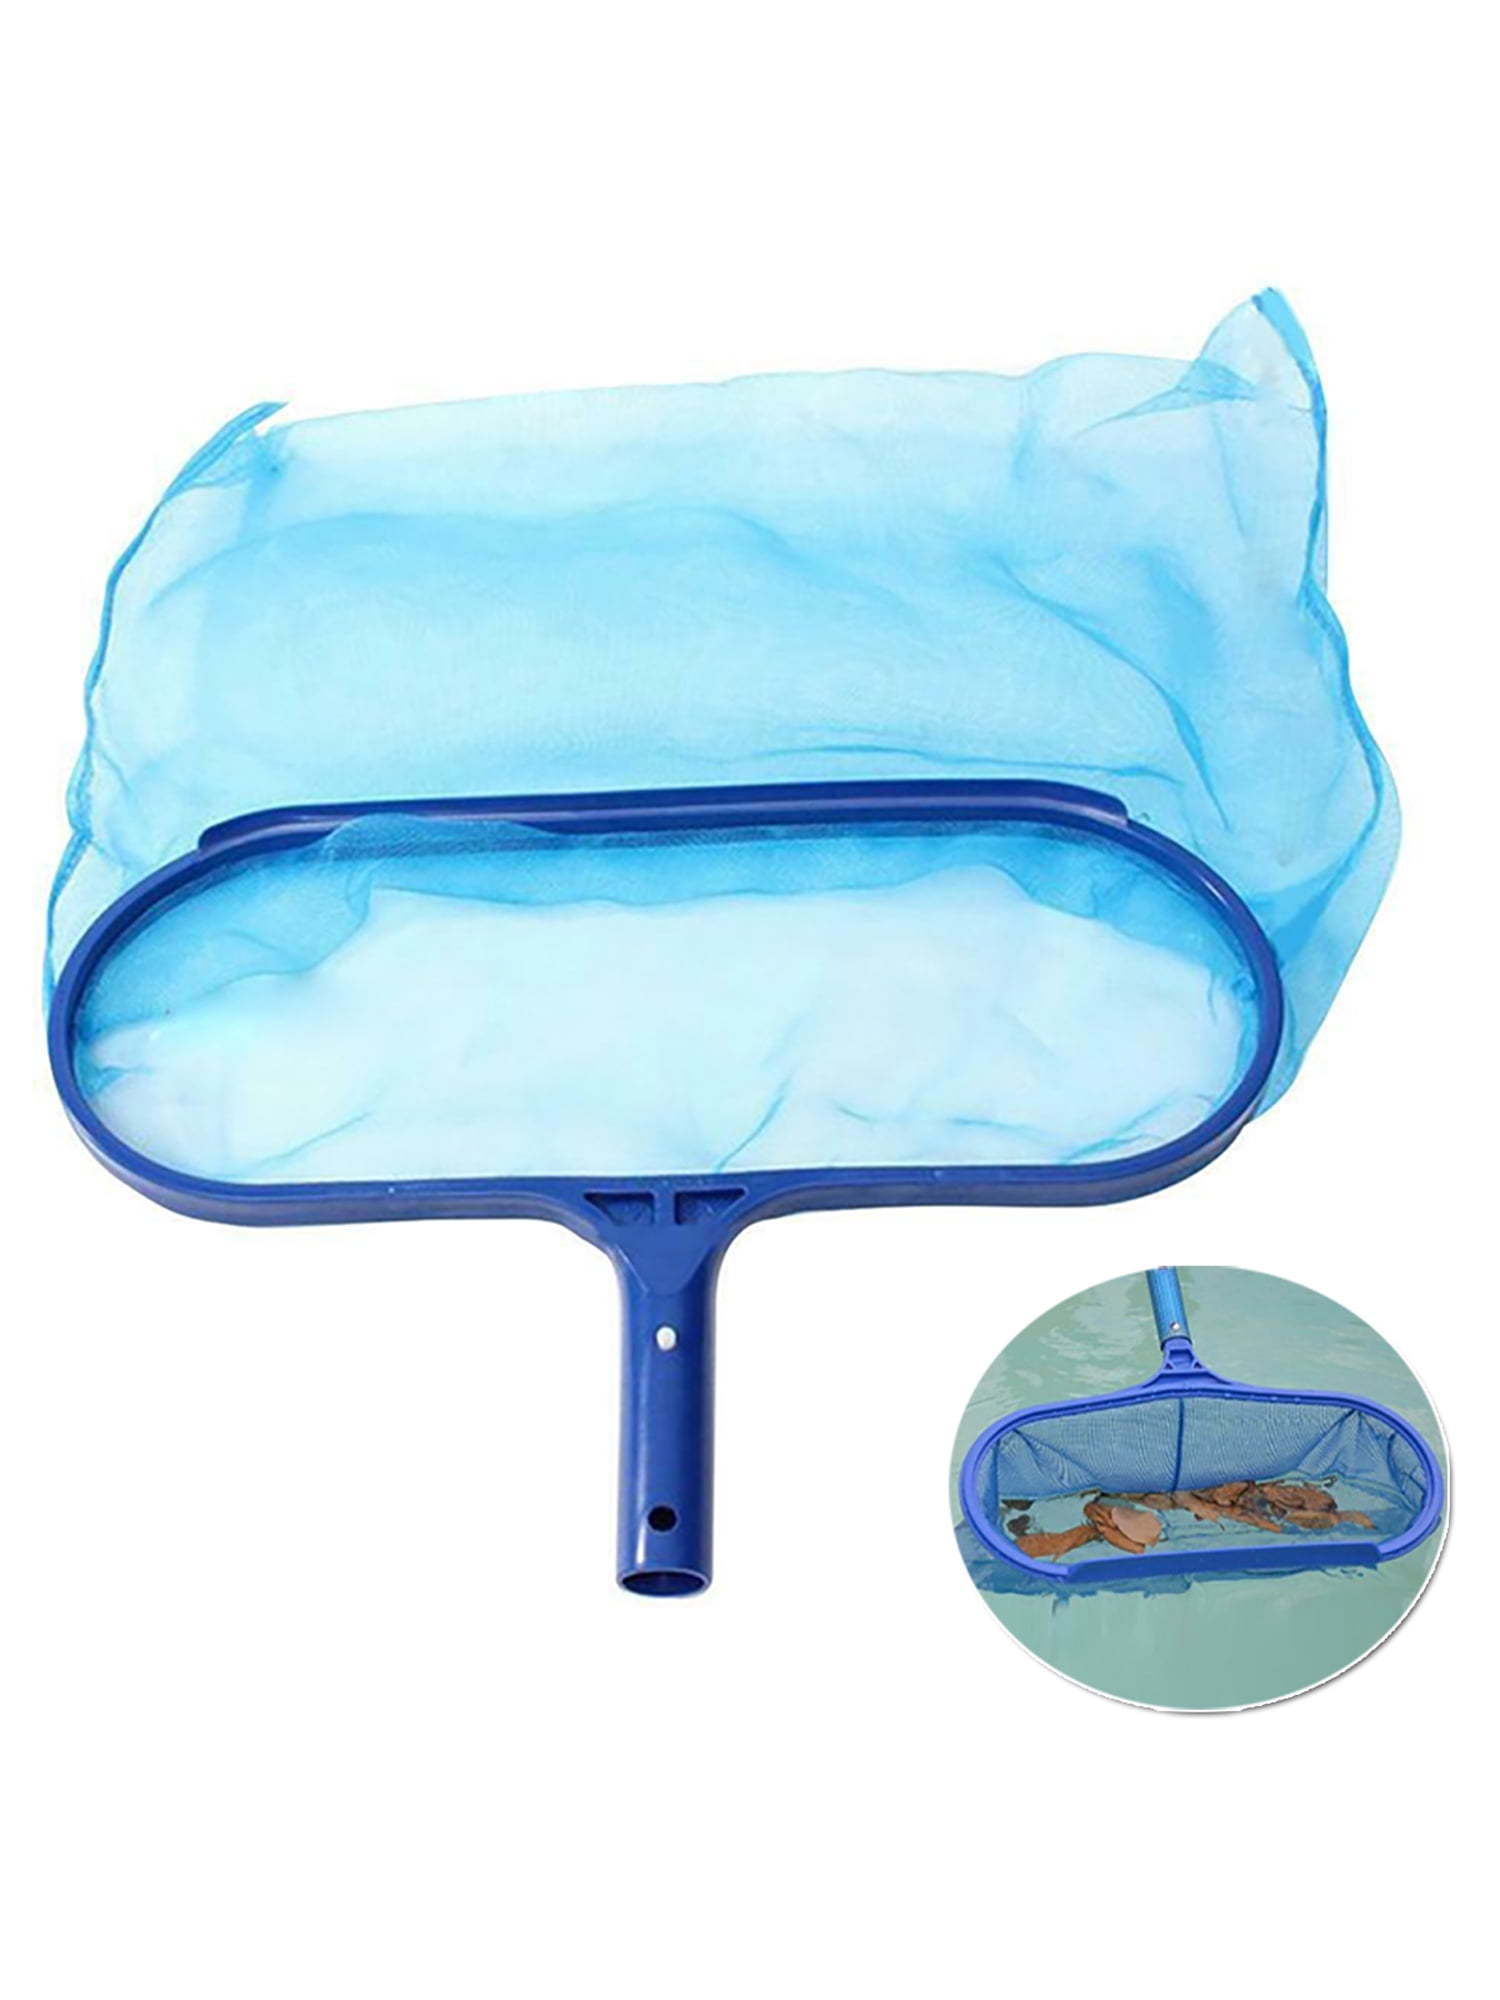 Swimming Pool Leaf Skimmer Rake Net Hot Tub Spa Cleaning Leaves Mesh Tool Blue 